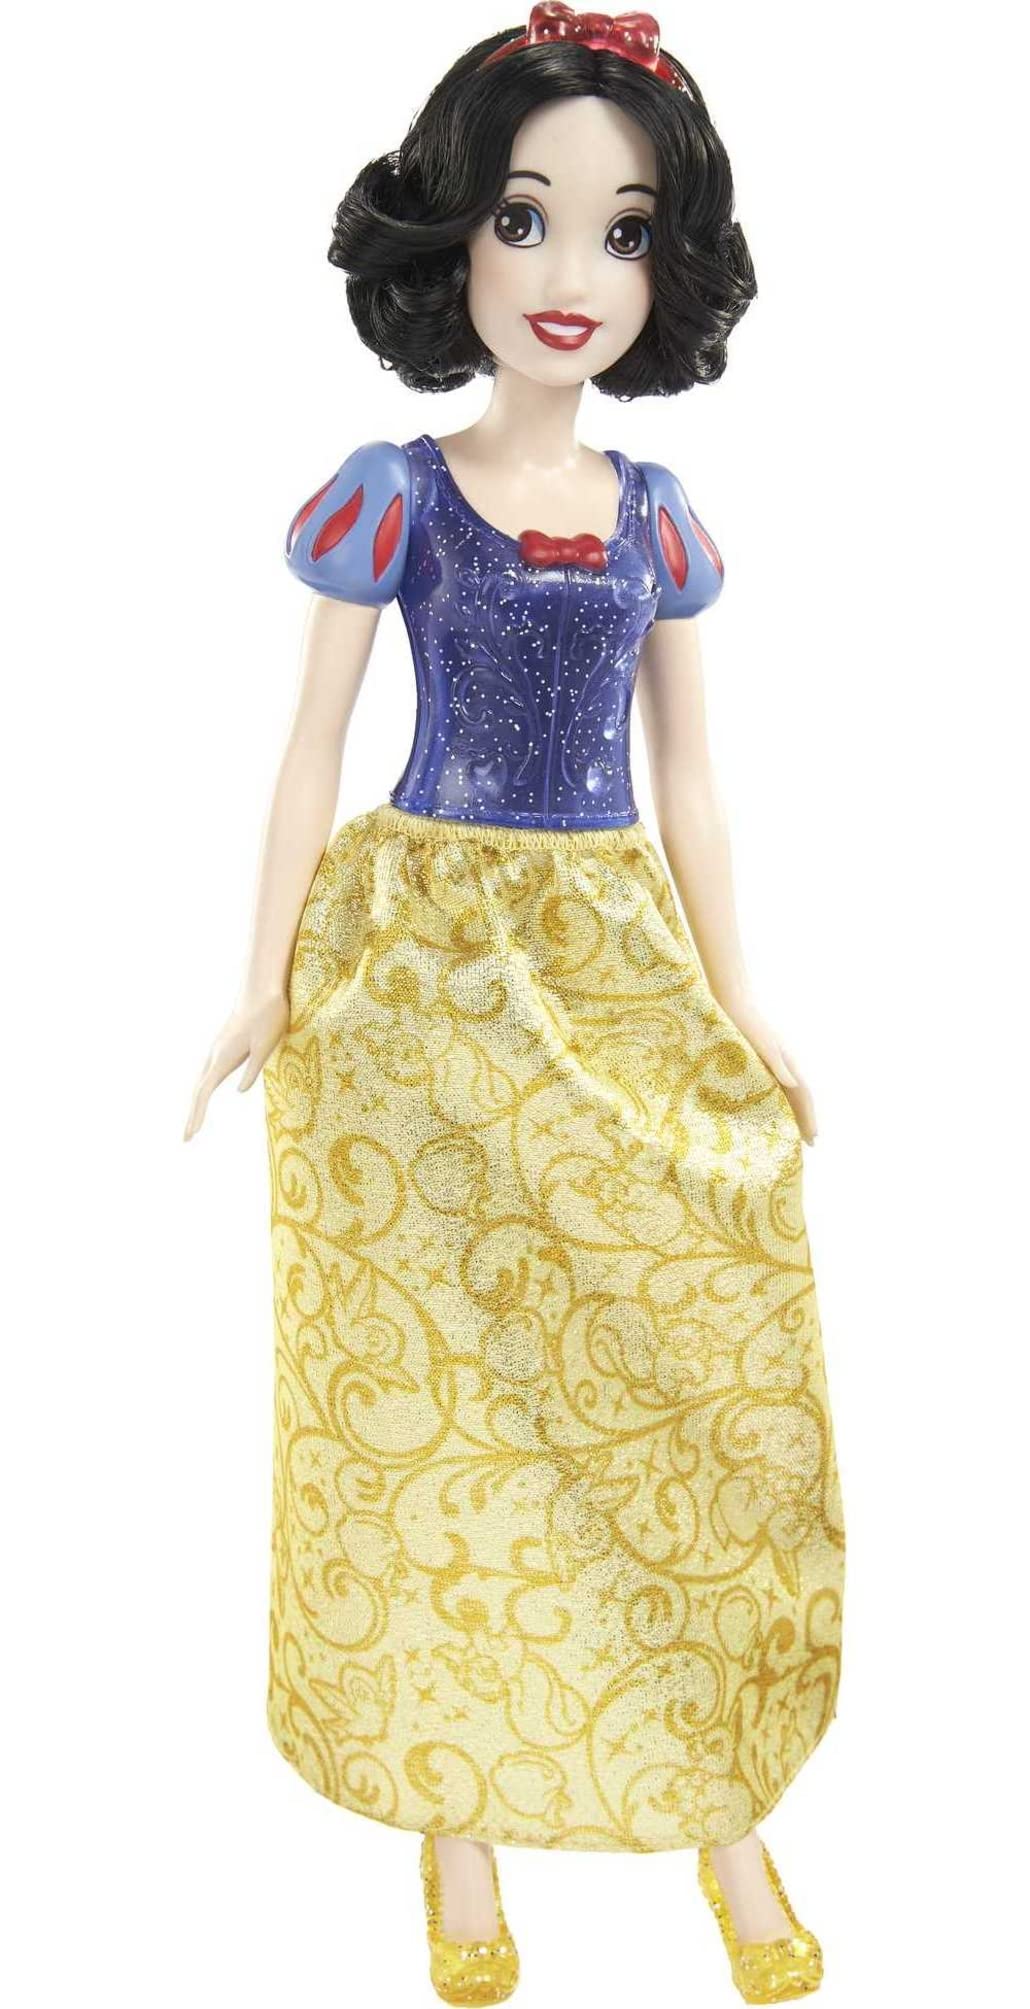 Mattel Disney Princess Snow White Fashion Doll, Sparkling Look with Black Hair, Brown Eyes & Hair Accessory